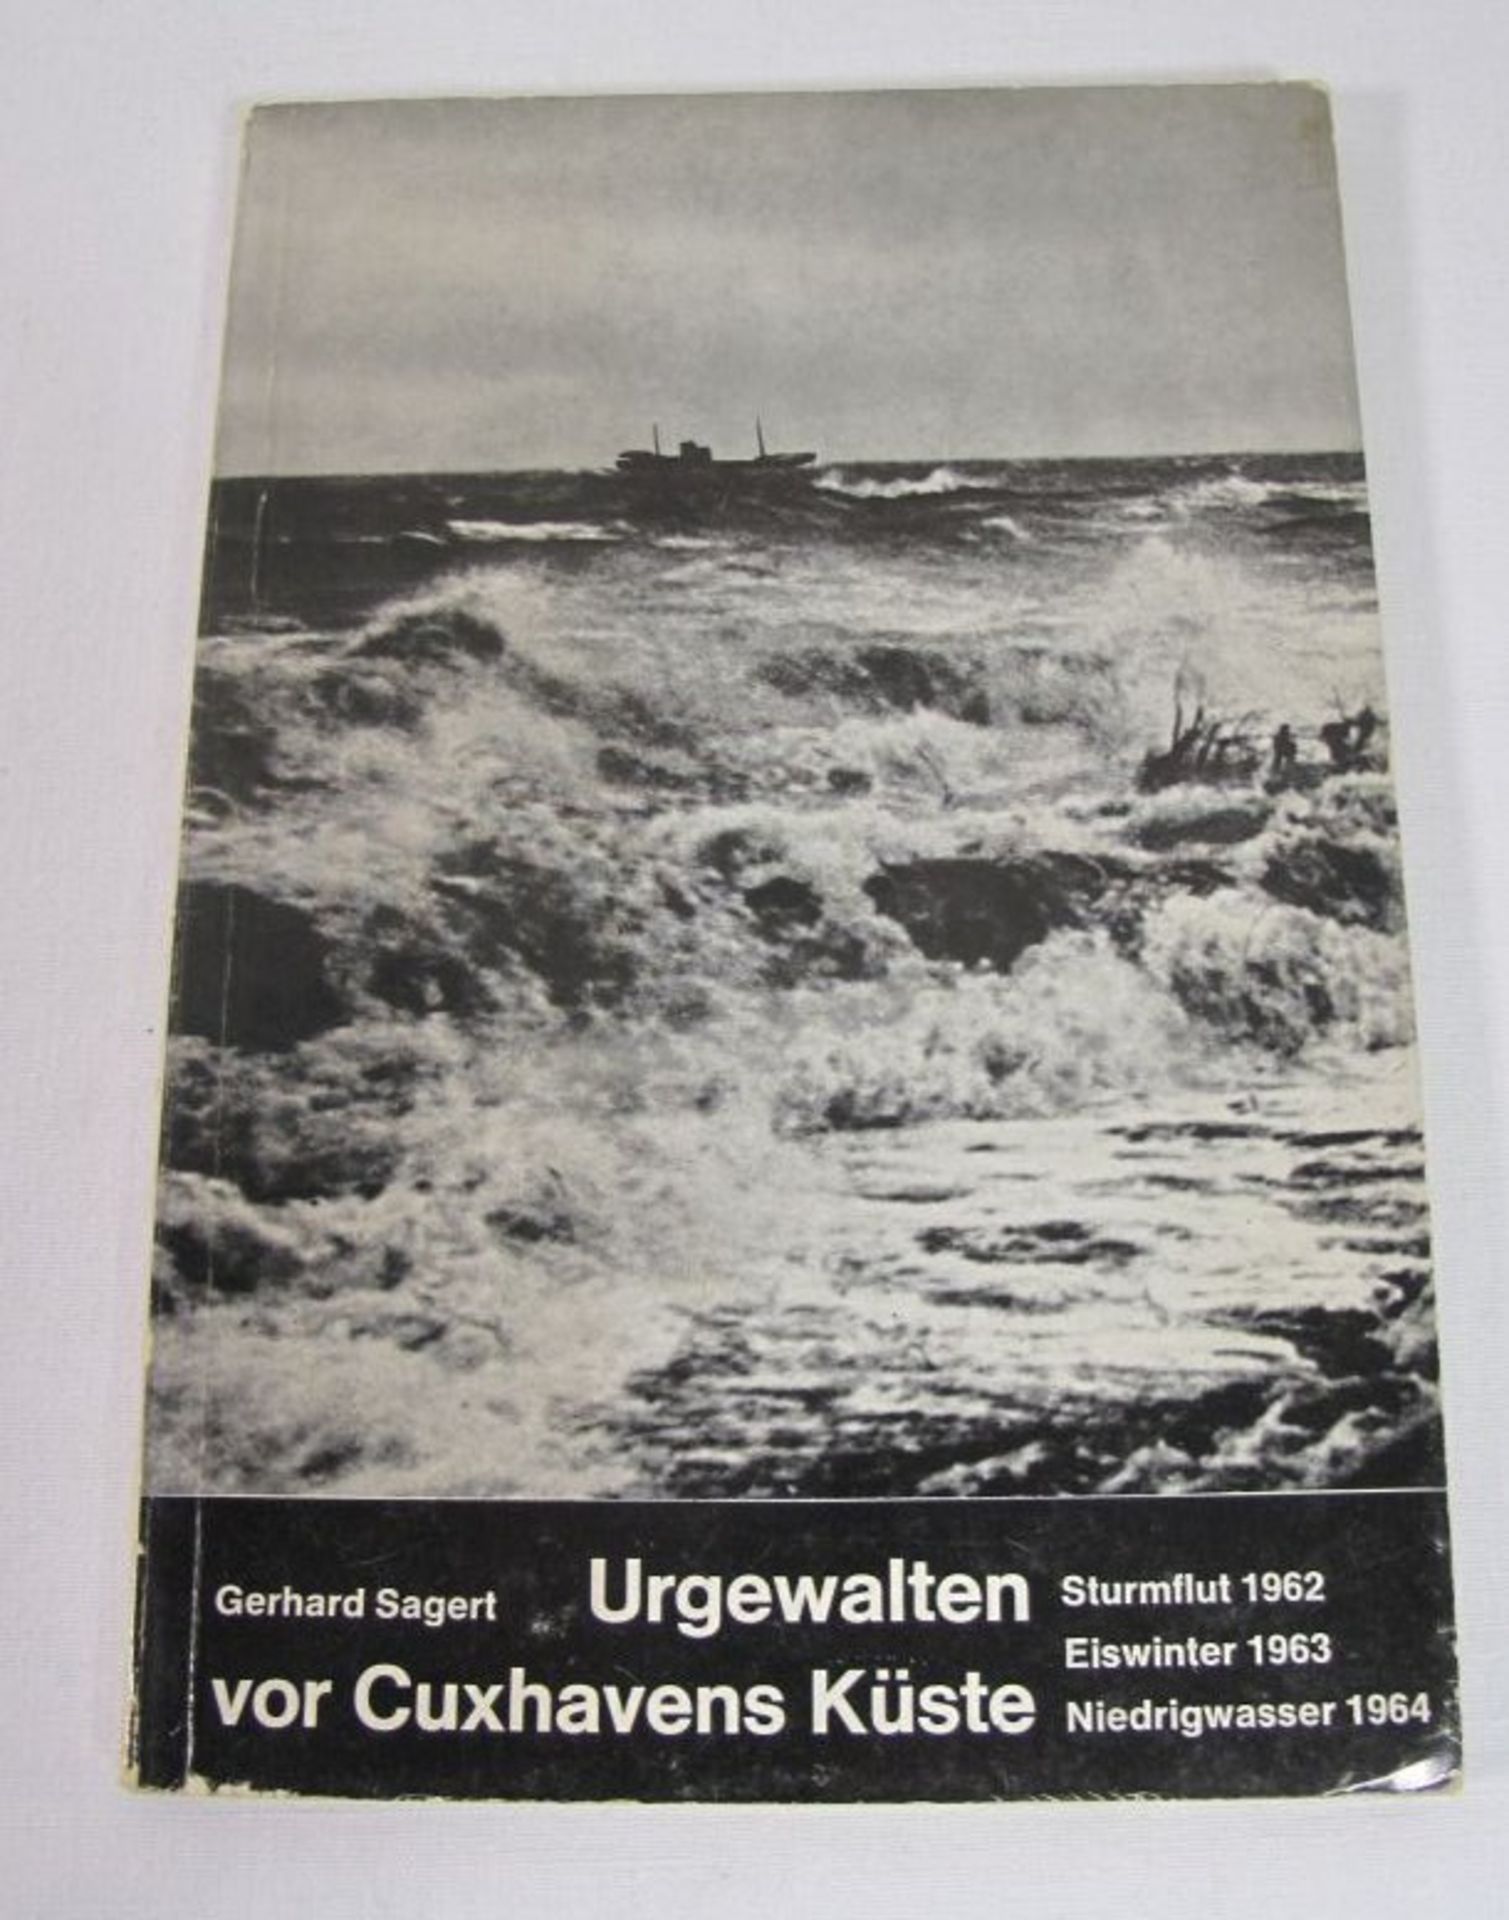 Urgewalten vor Cuxhavens Küste, Gerhard Sagert, Paperback